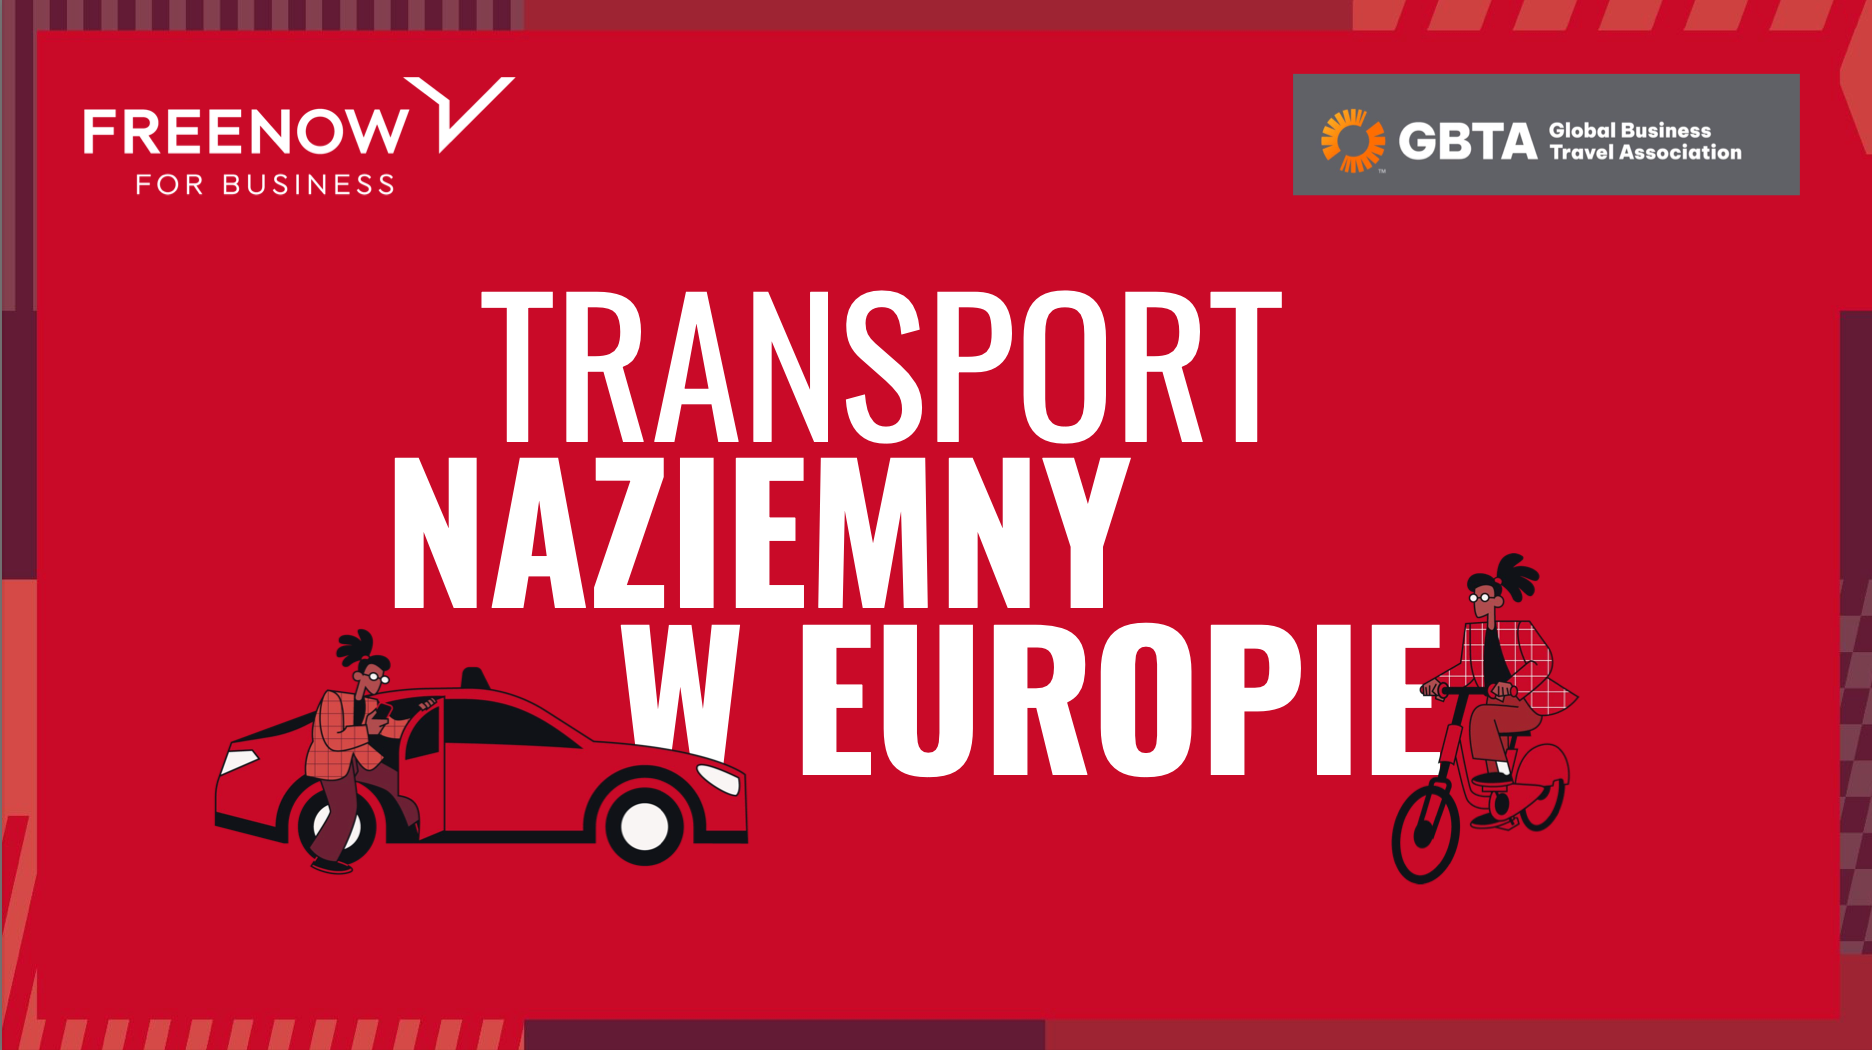 GBTA Whitepaper Ground Transportation in Europe with FREENOW